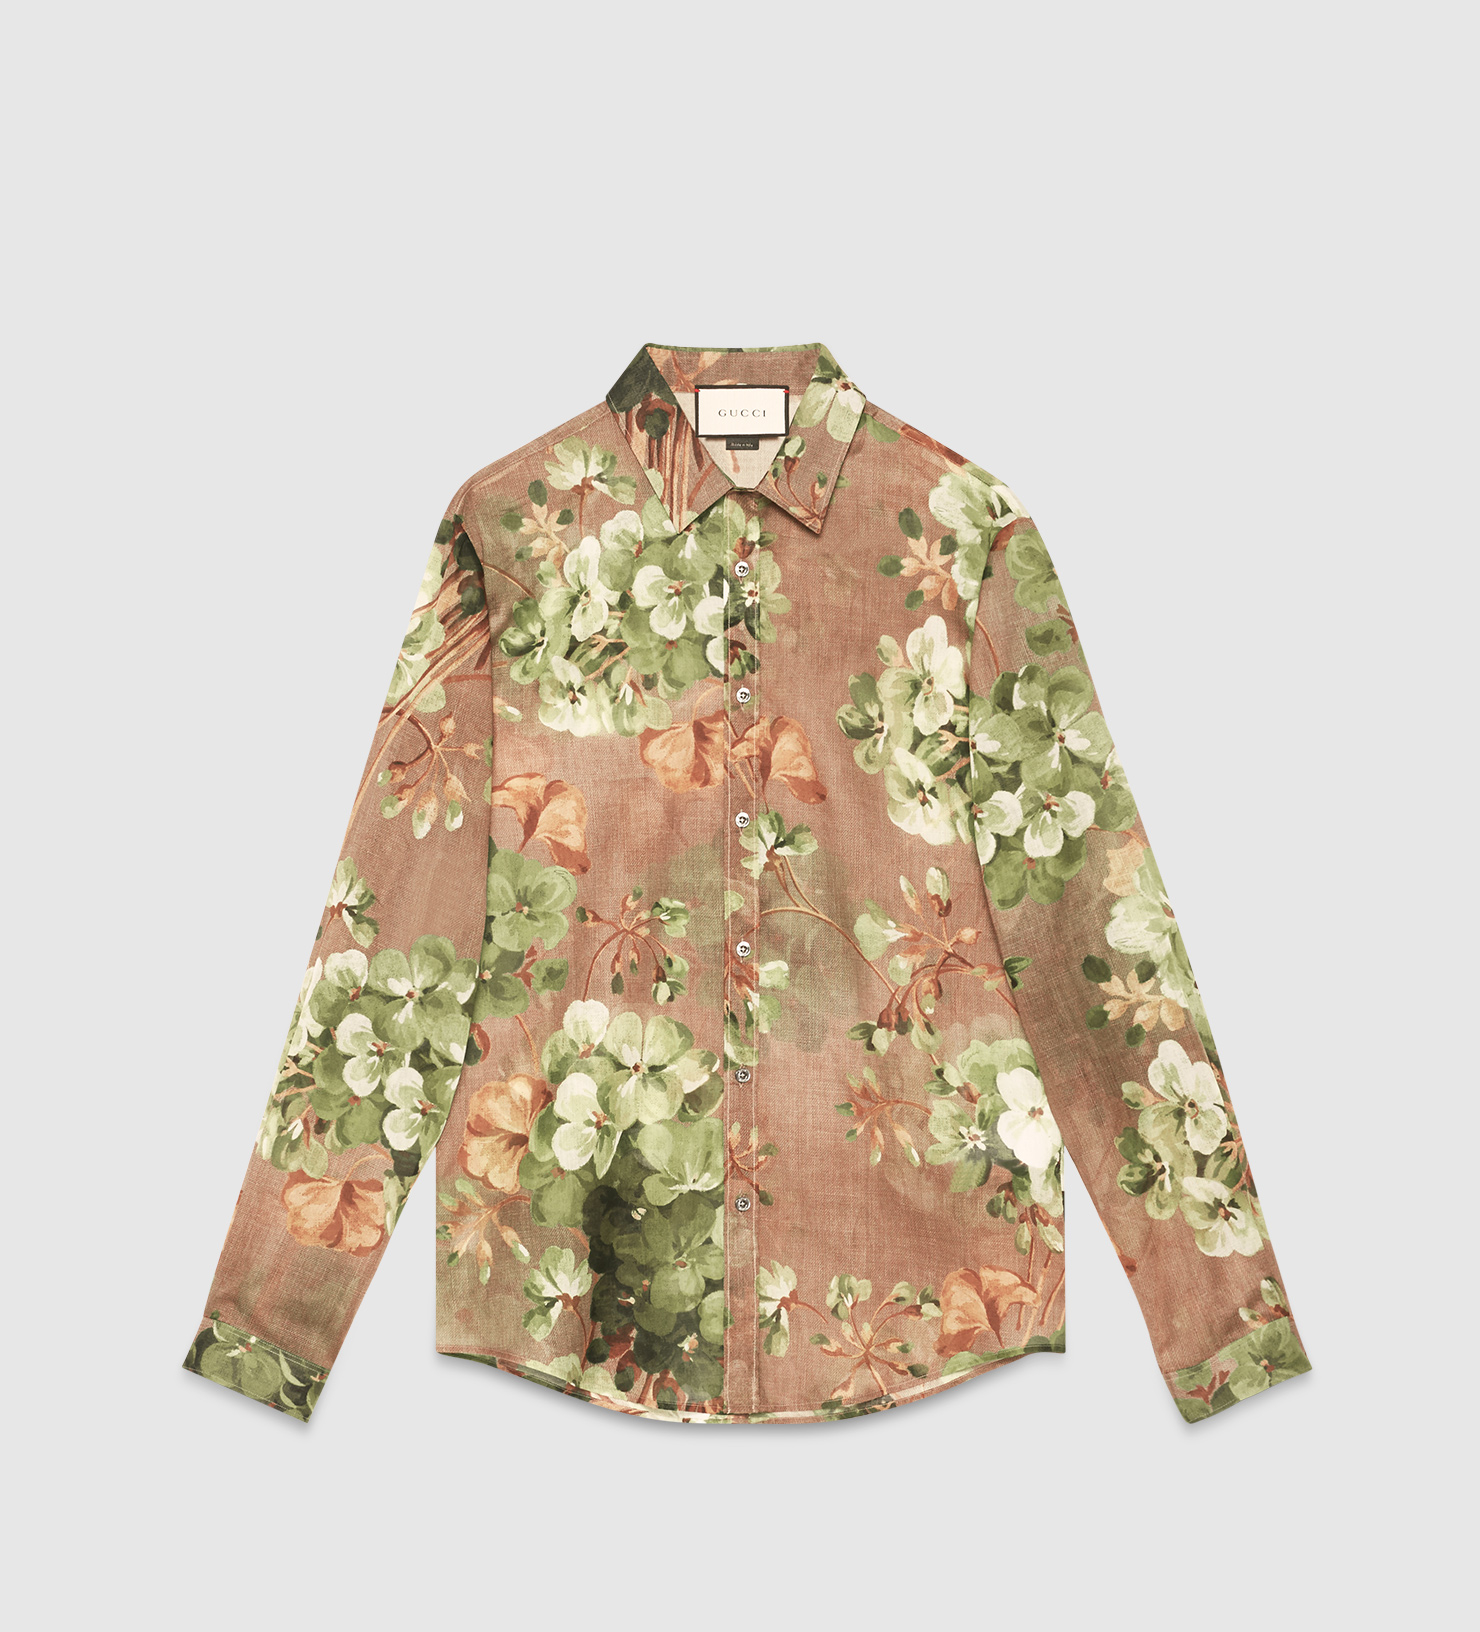 gucci bloom shirt, OFF 77%,www 